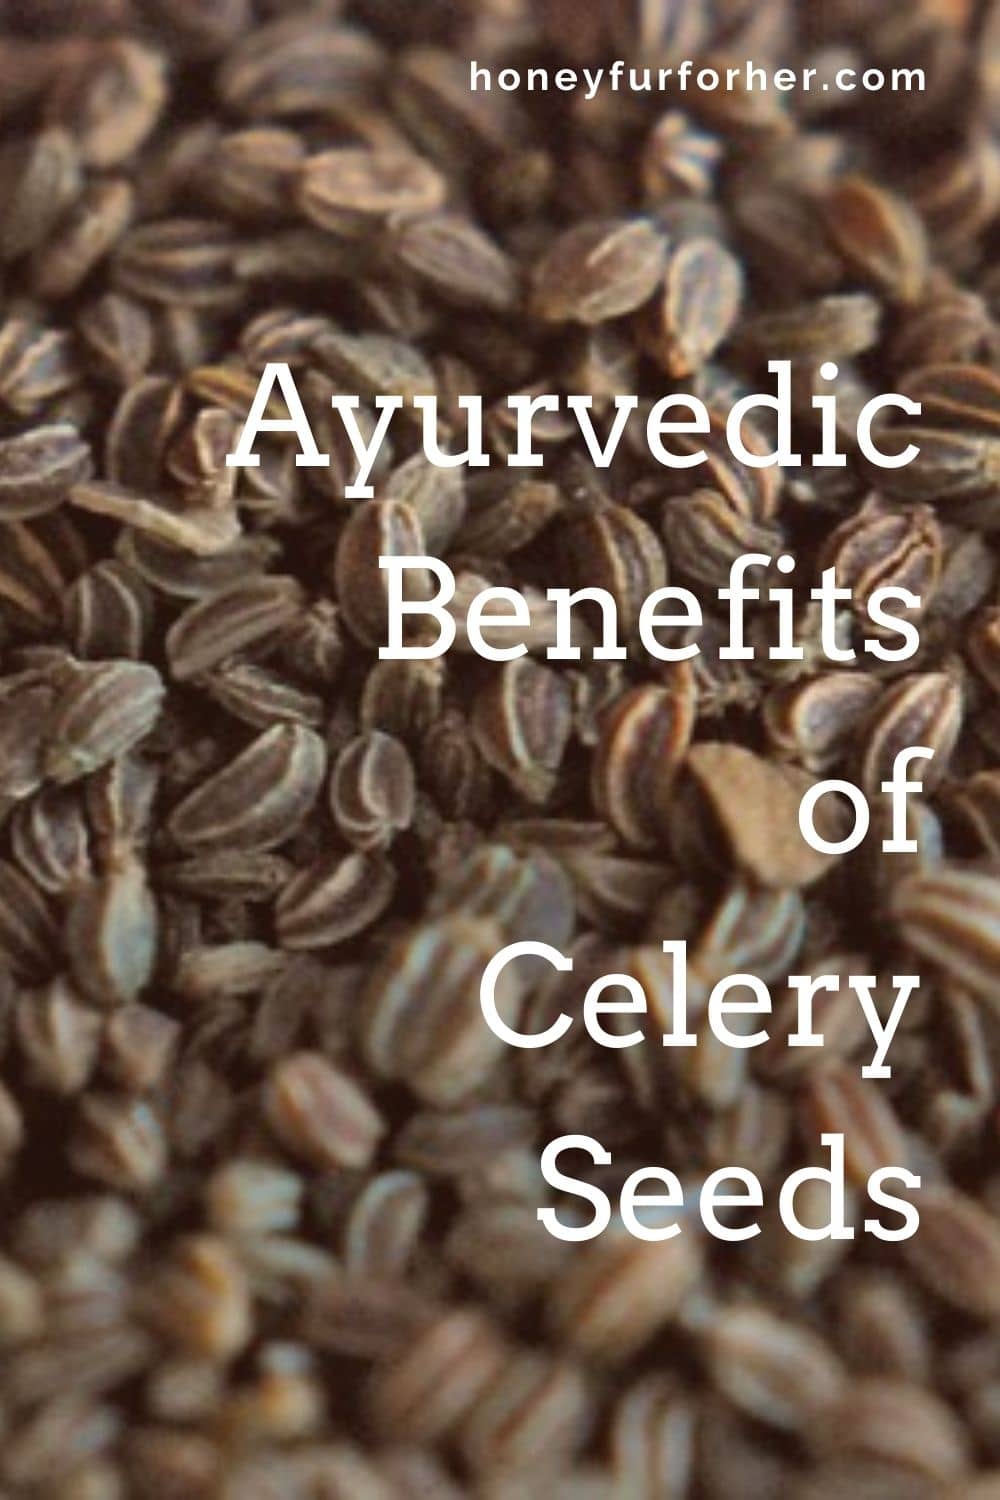 Ajamoda Celery Seeds Benefits Pinterest Graphics